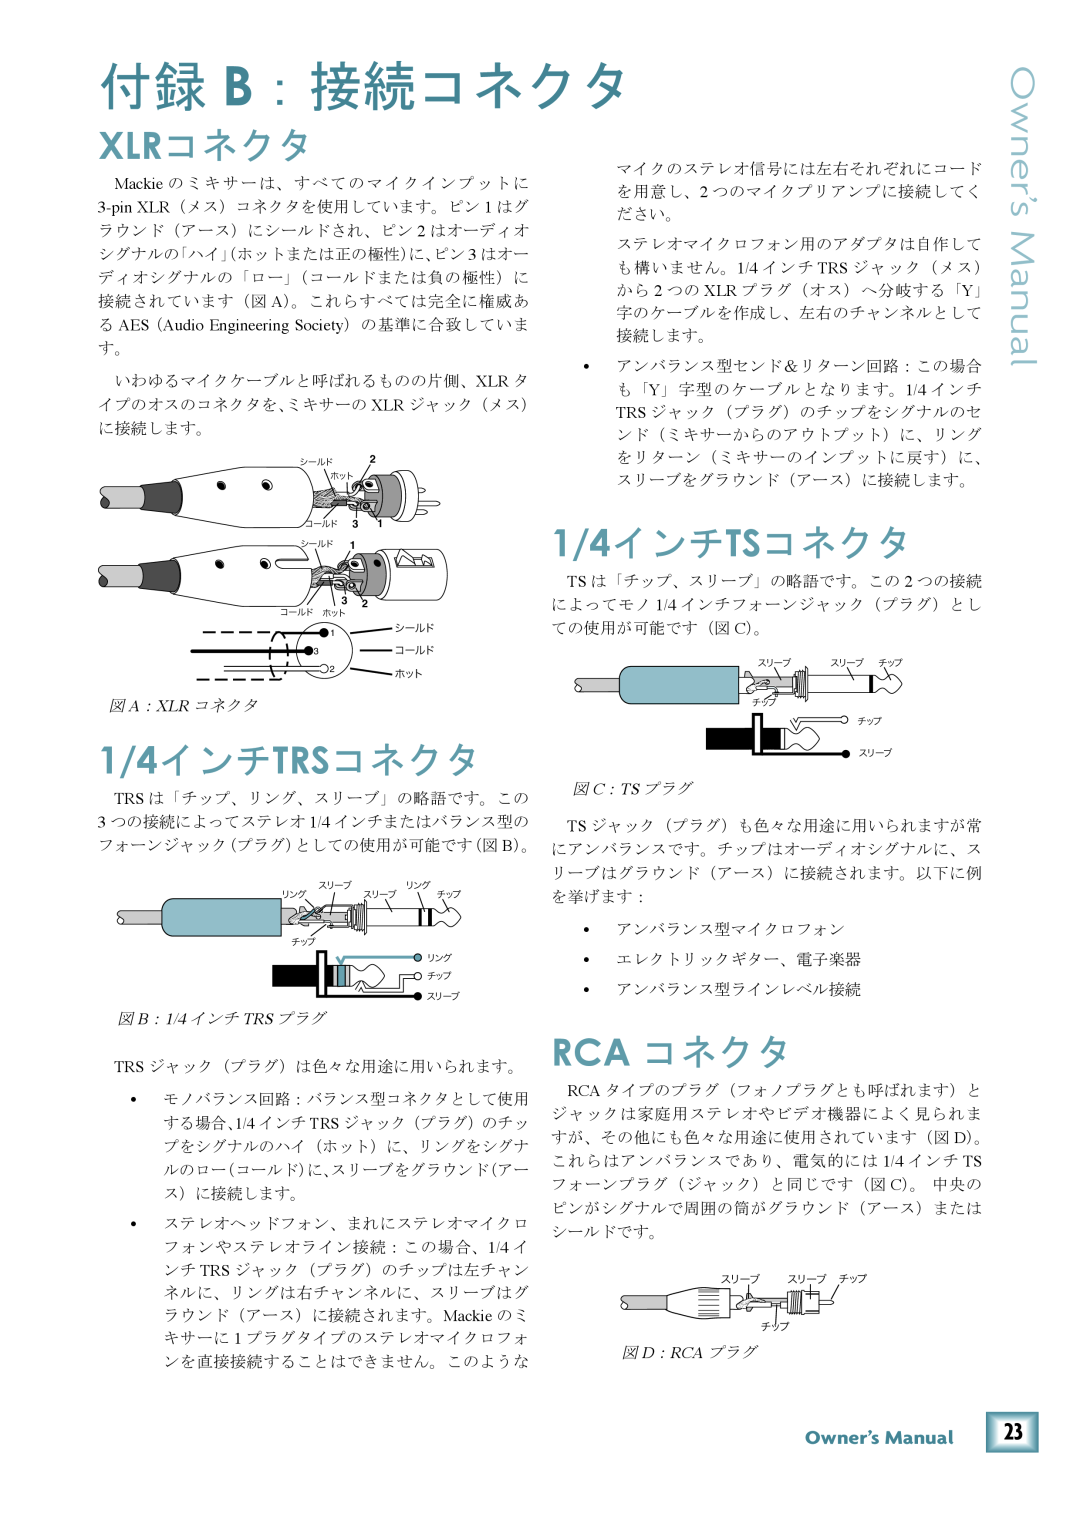 Mackie 802-VLZ3 manual 付録 B：接続コネクタ, Xlrコネクタ, 1/4インチTRSコネクタ, Rca コネクタ, 1/4インチ TSコネクタ 